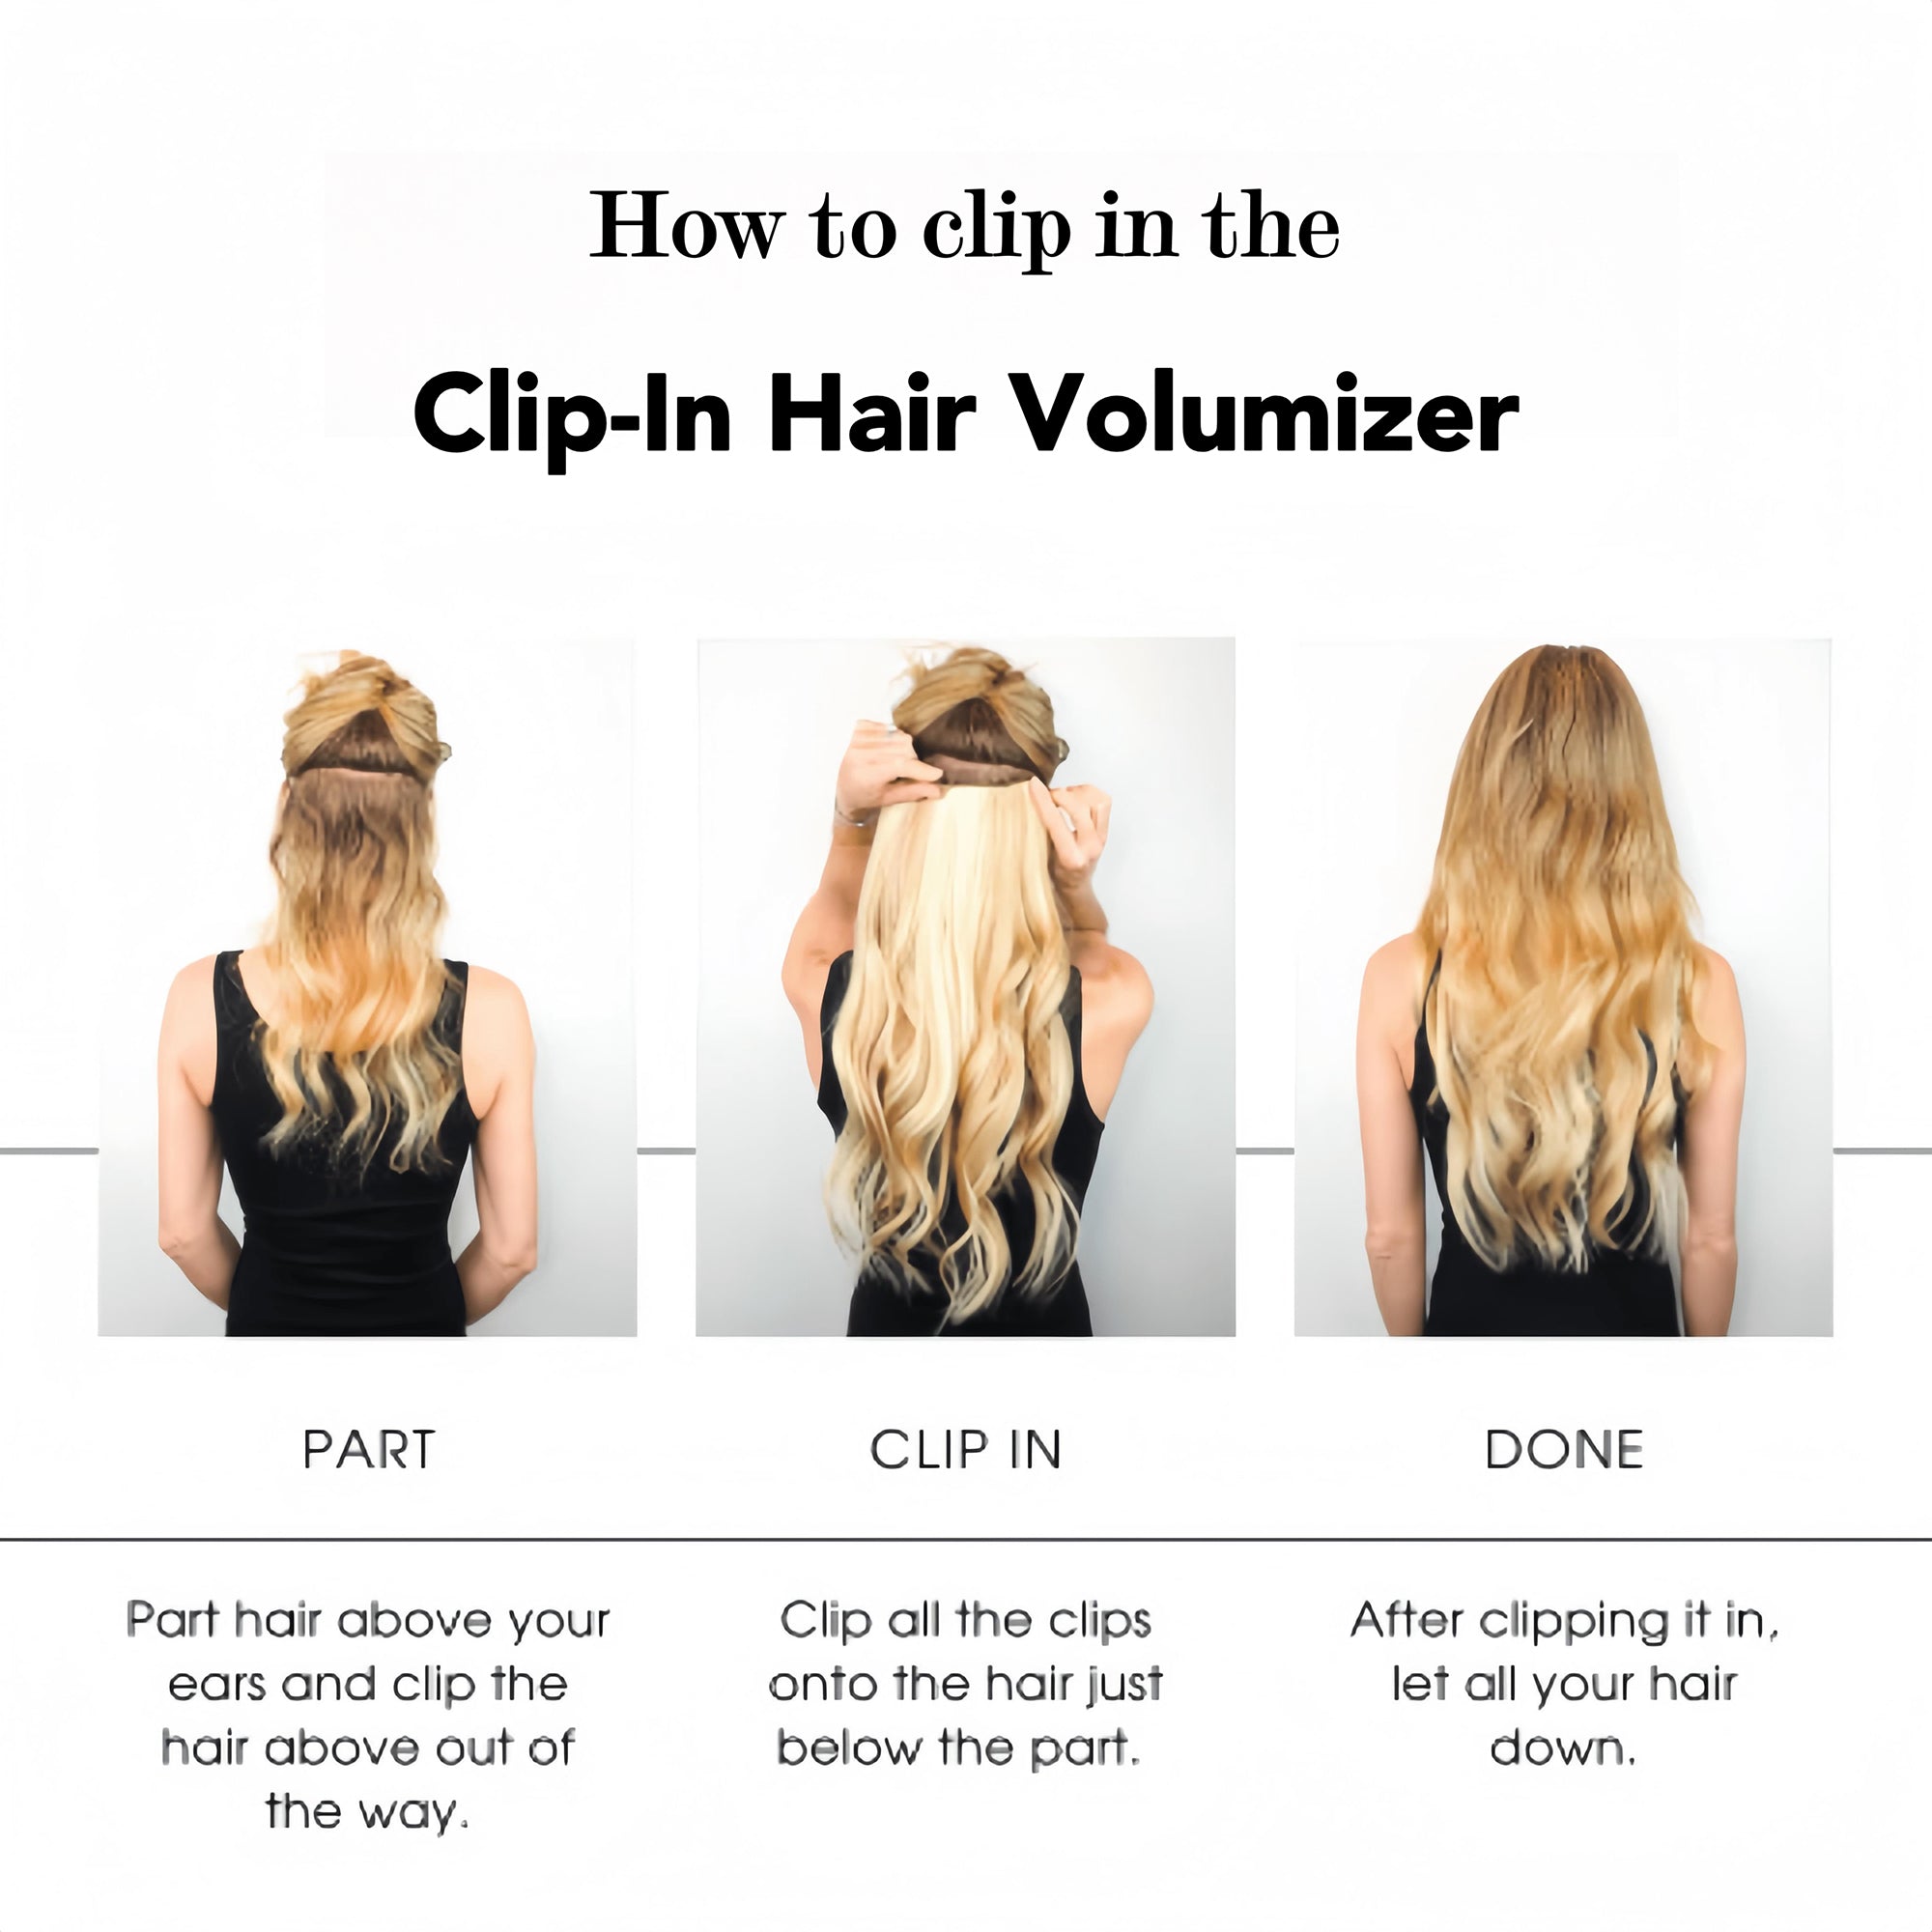 Clip-In Hair Volumizer